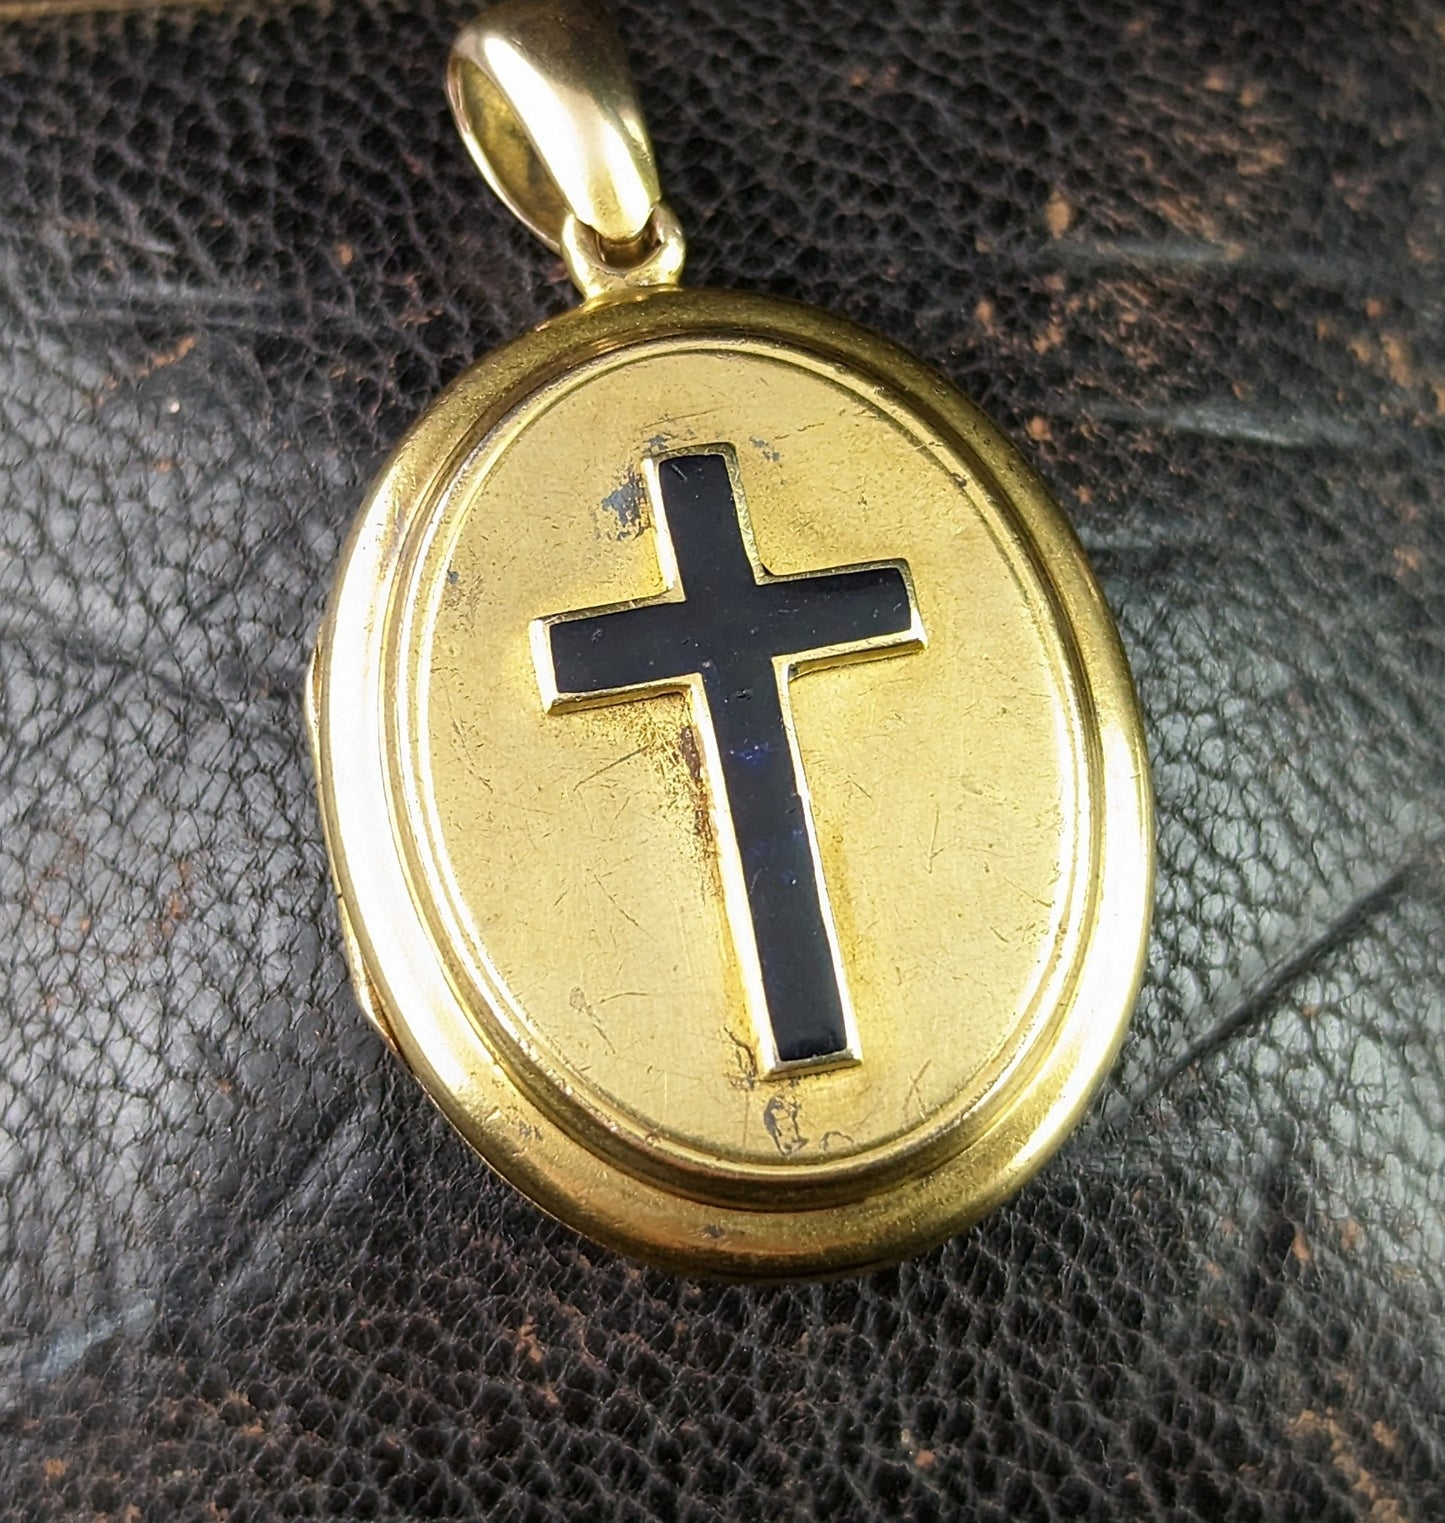 Antique 18ct gold mourning locket, Black enamel cross pendant